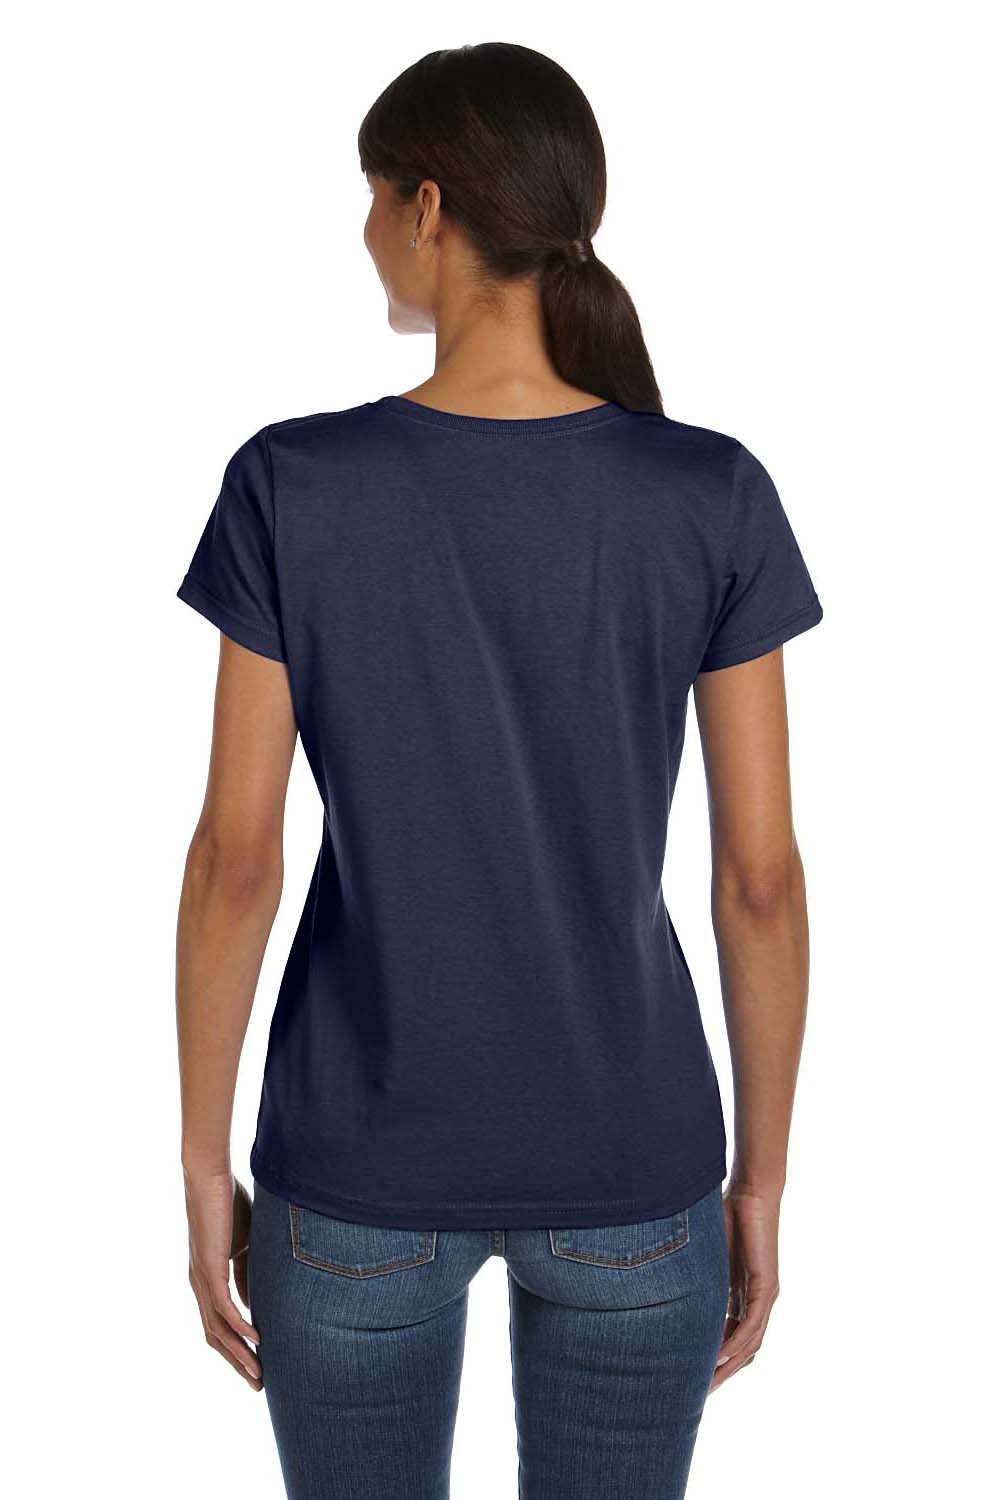 Fruit Of The Loom L3930R Womens HD Jersey Short Sleeve Crewneck T-Shirt Navy Blue Back